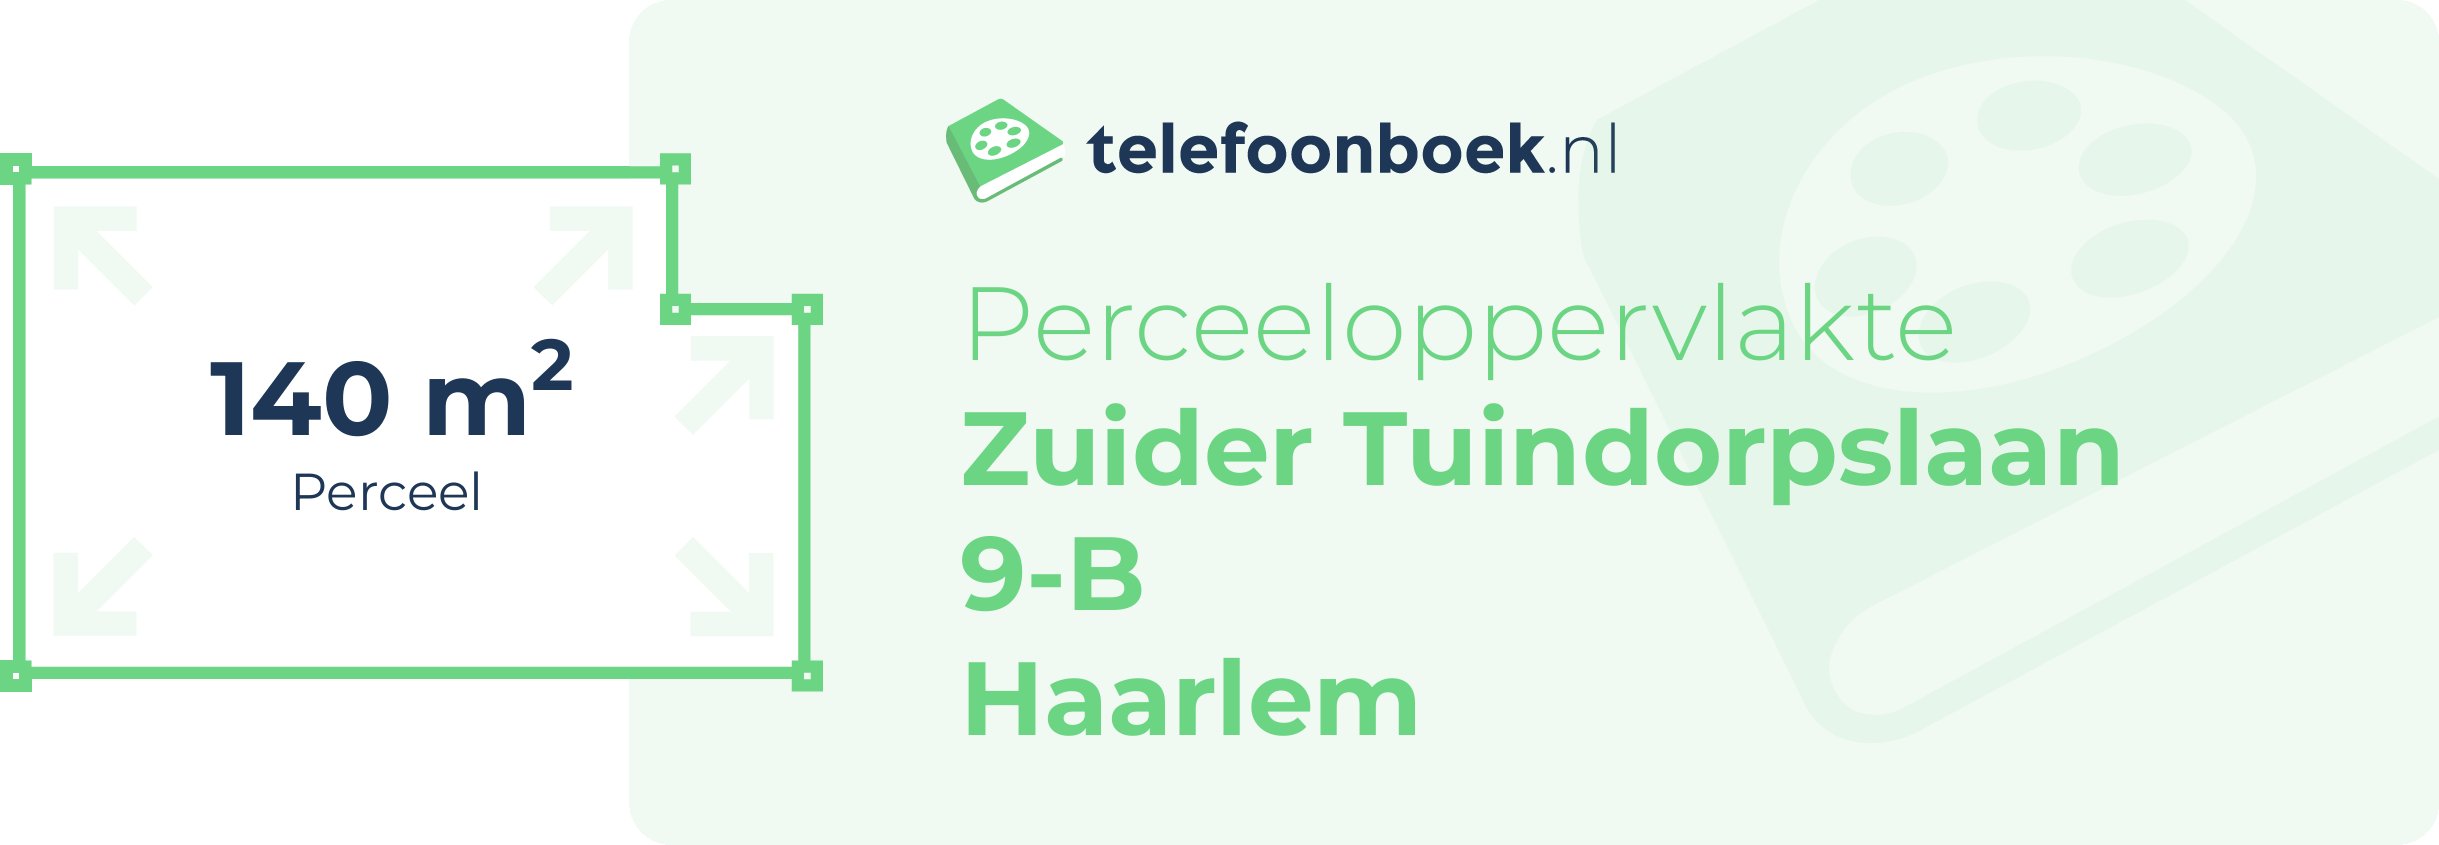 Perceeloppervlakte Zuider Tuindorpslaan 9-B Haarlem